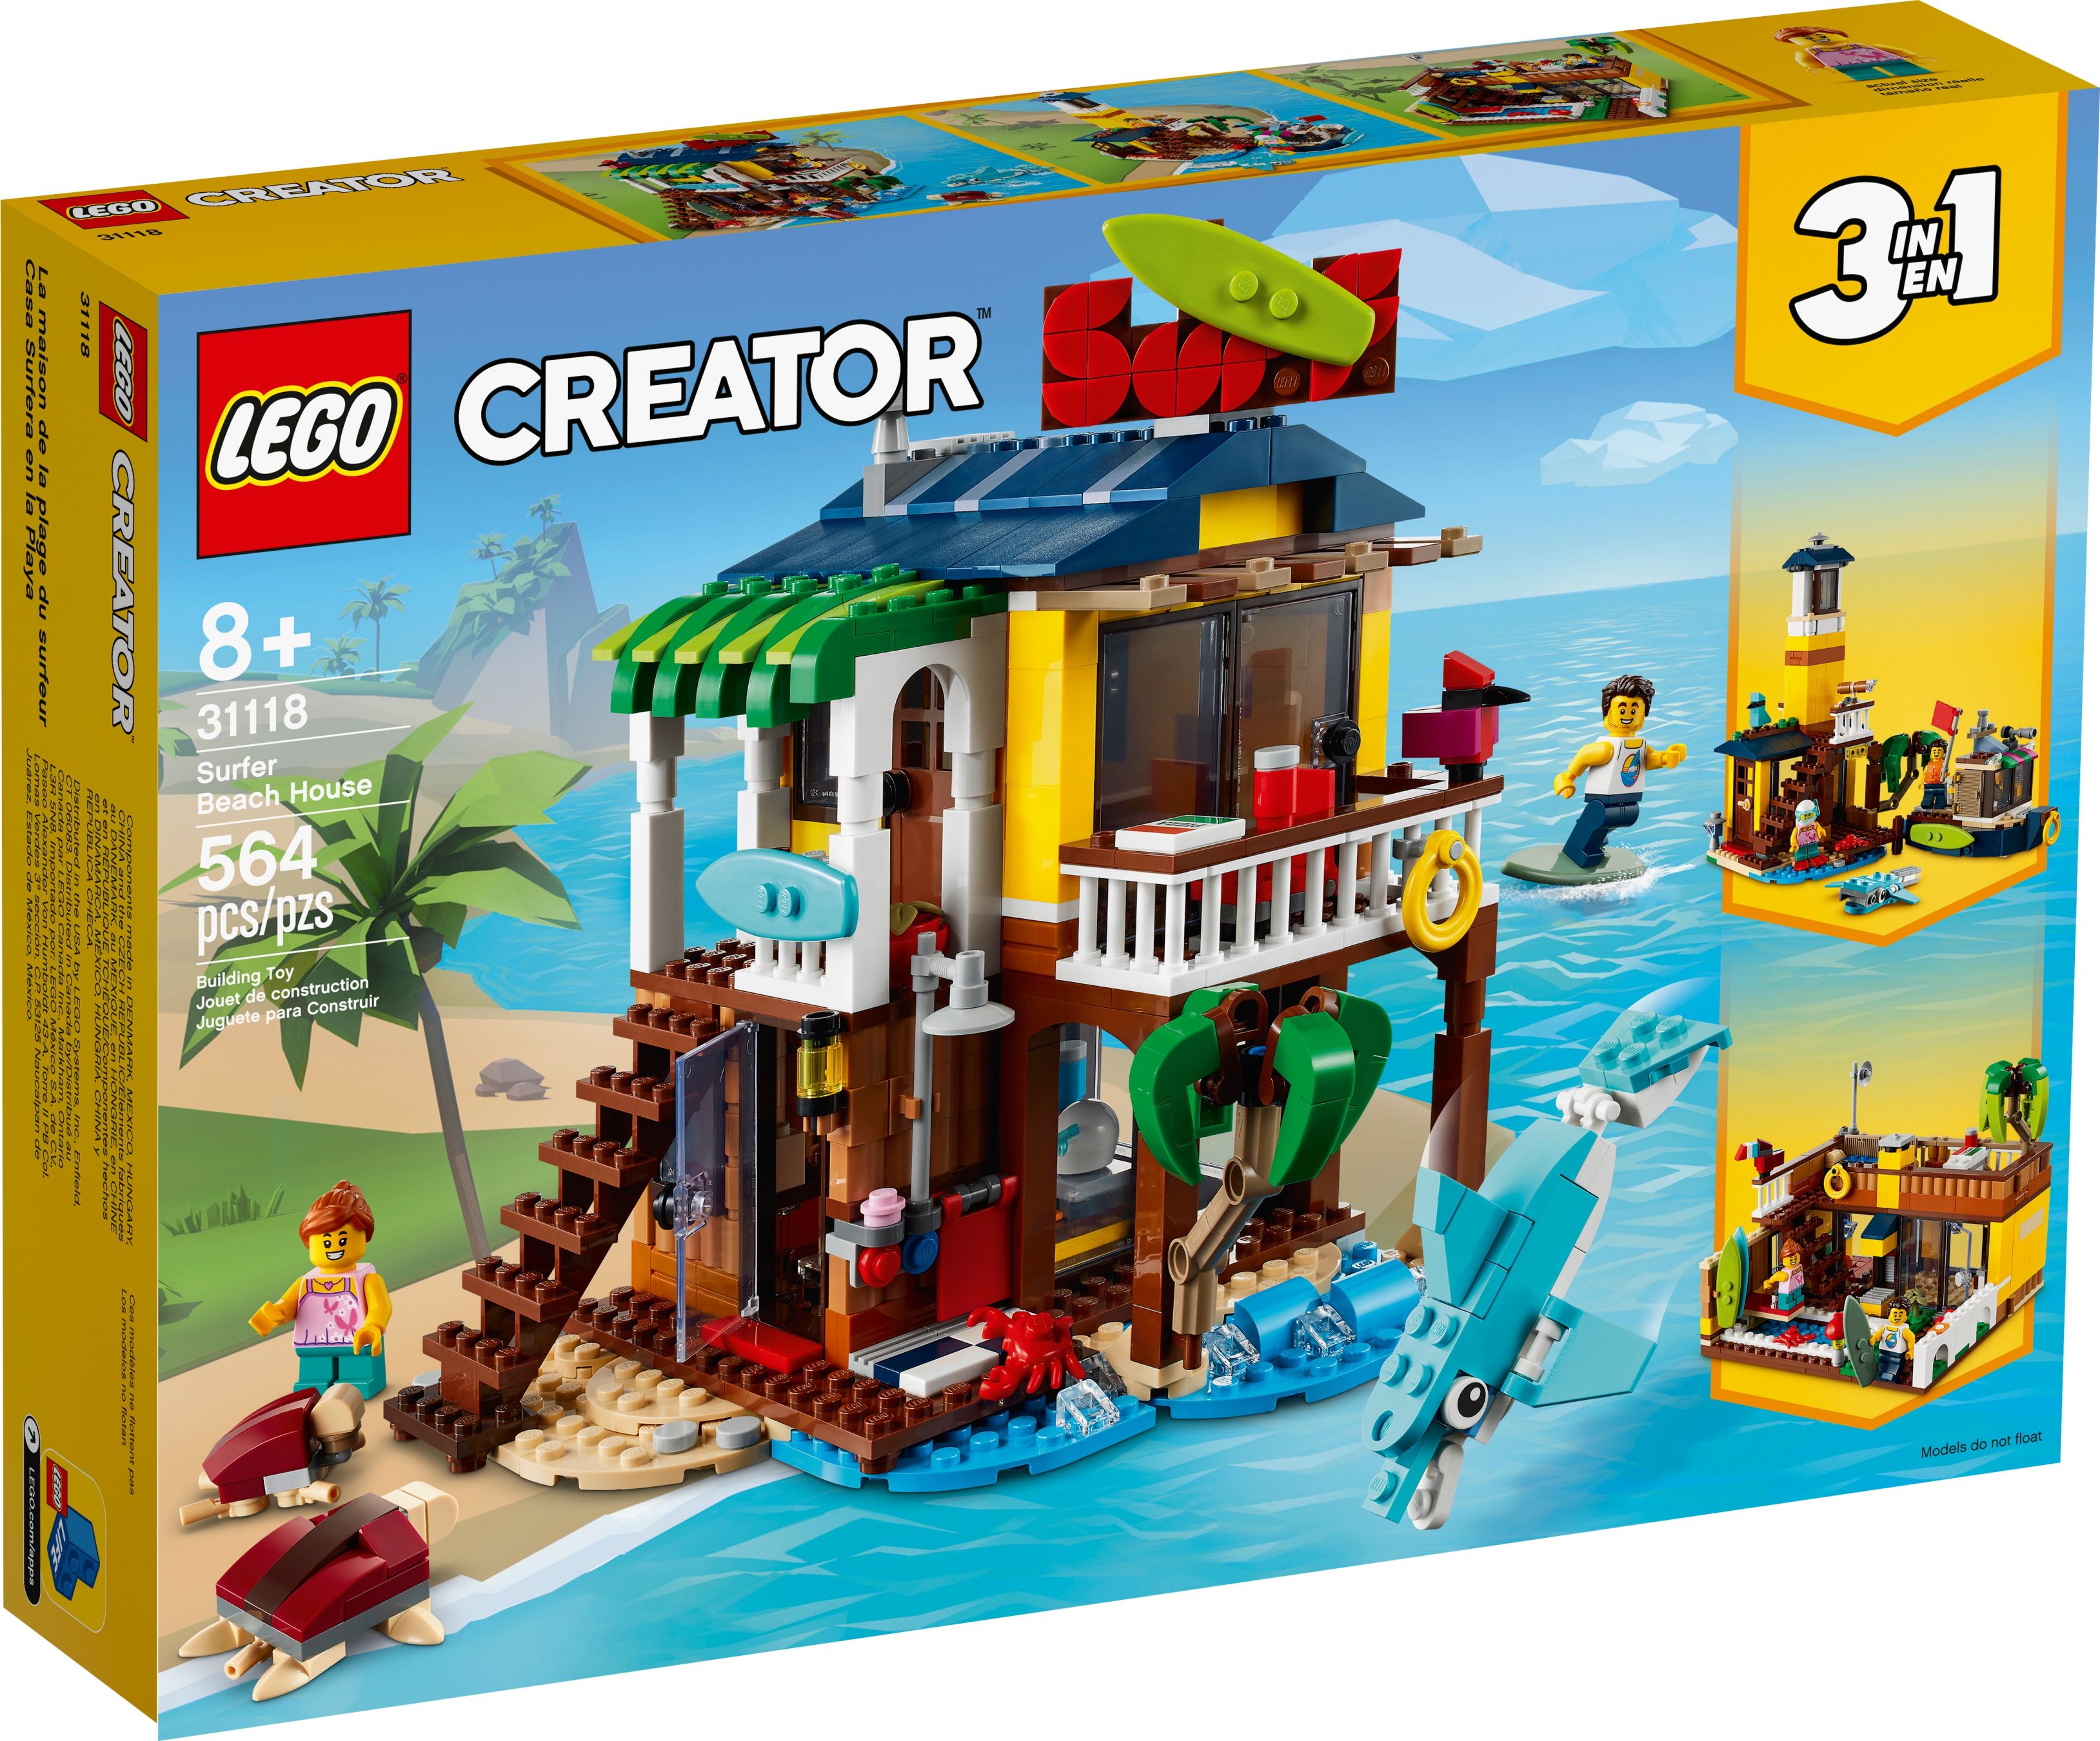 LEGO Creator 31118 Surfer-Strandhaus LEGO_31118_alt1.jpg